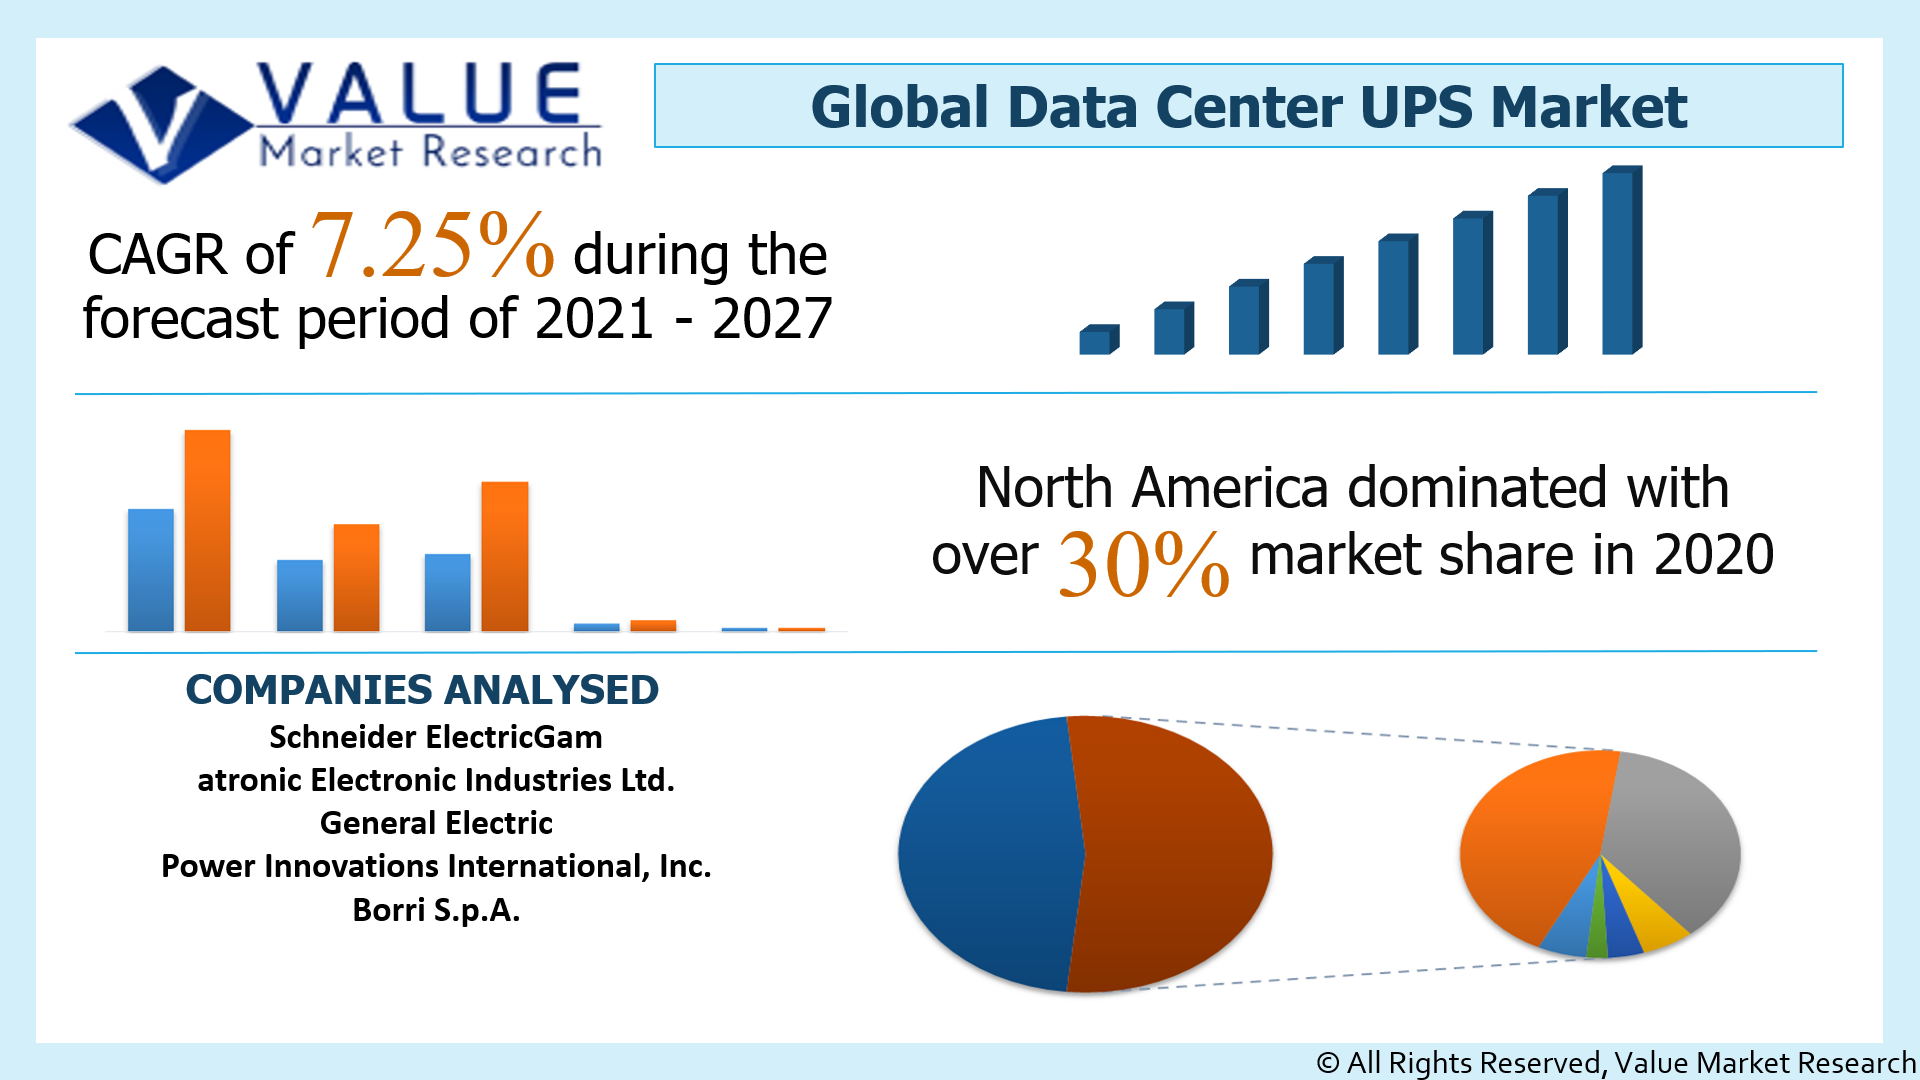 Global Data Center UPS Market Share